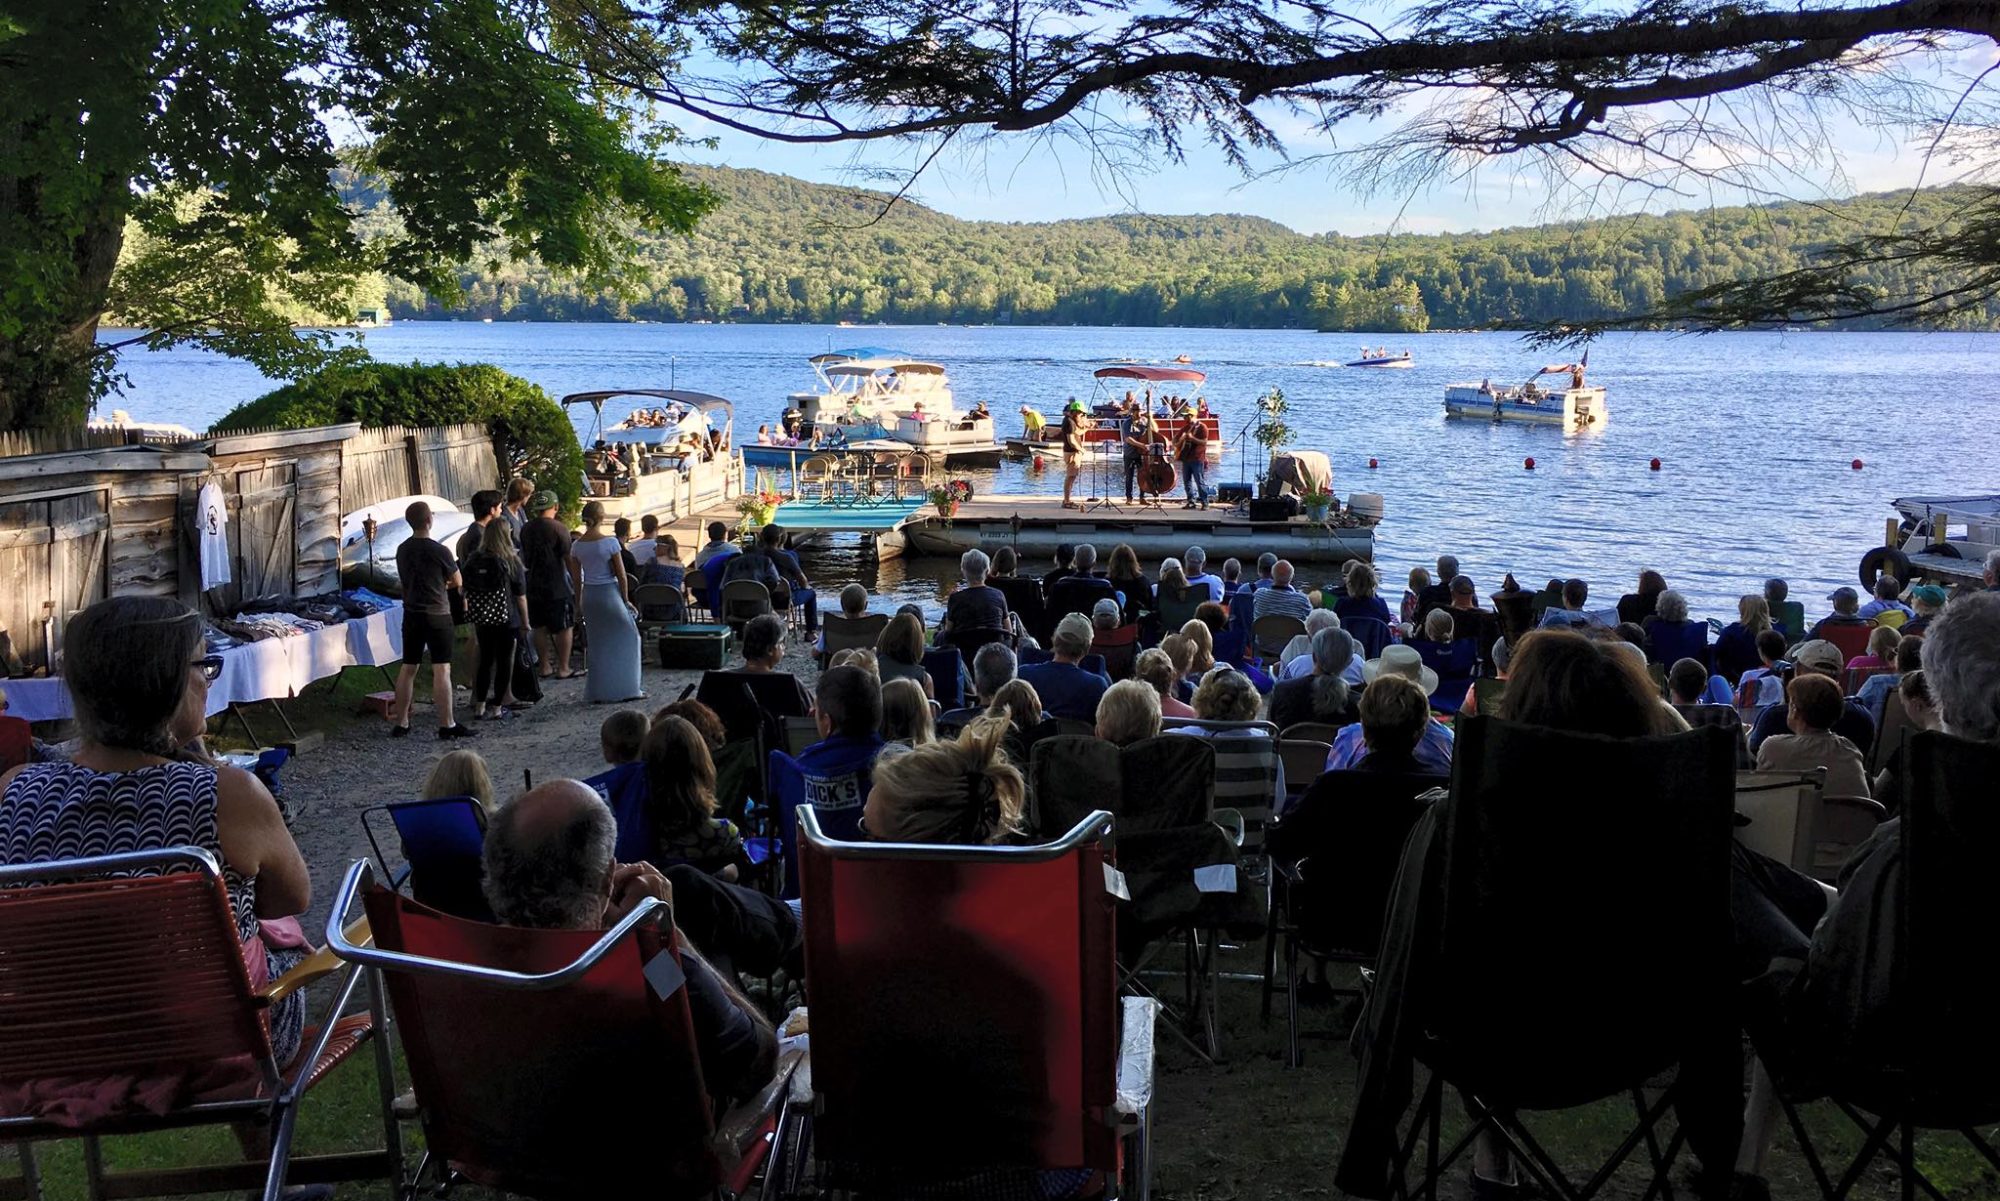 Caroga Arts Council Lakeside concert | Caroge Lake NY | Mohawk Valley Today